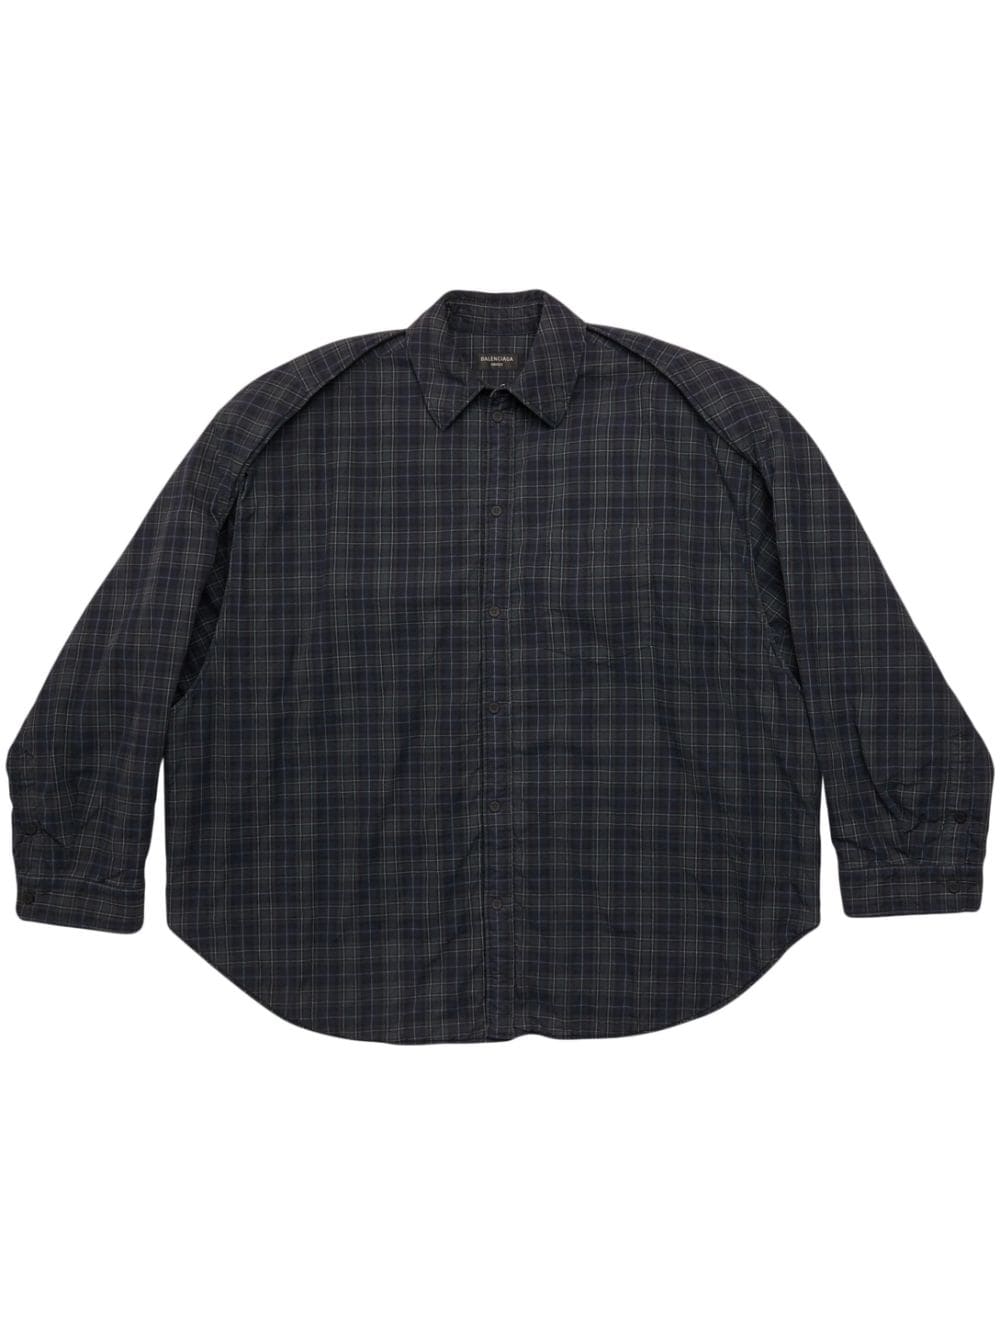 Checkered Design Flannel Shirt for Men - Grey